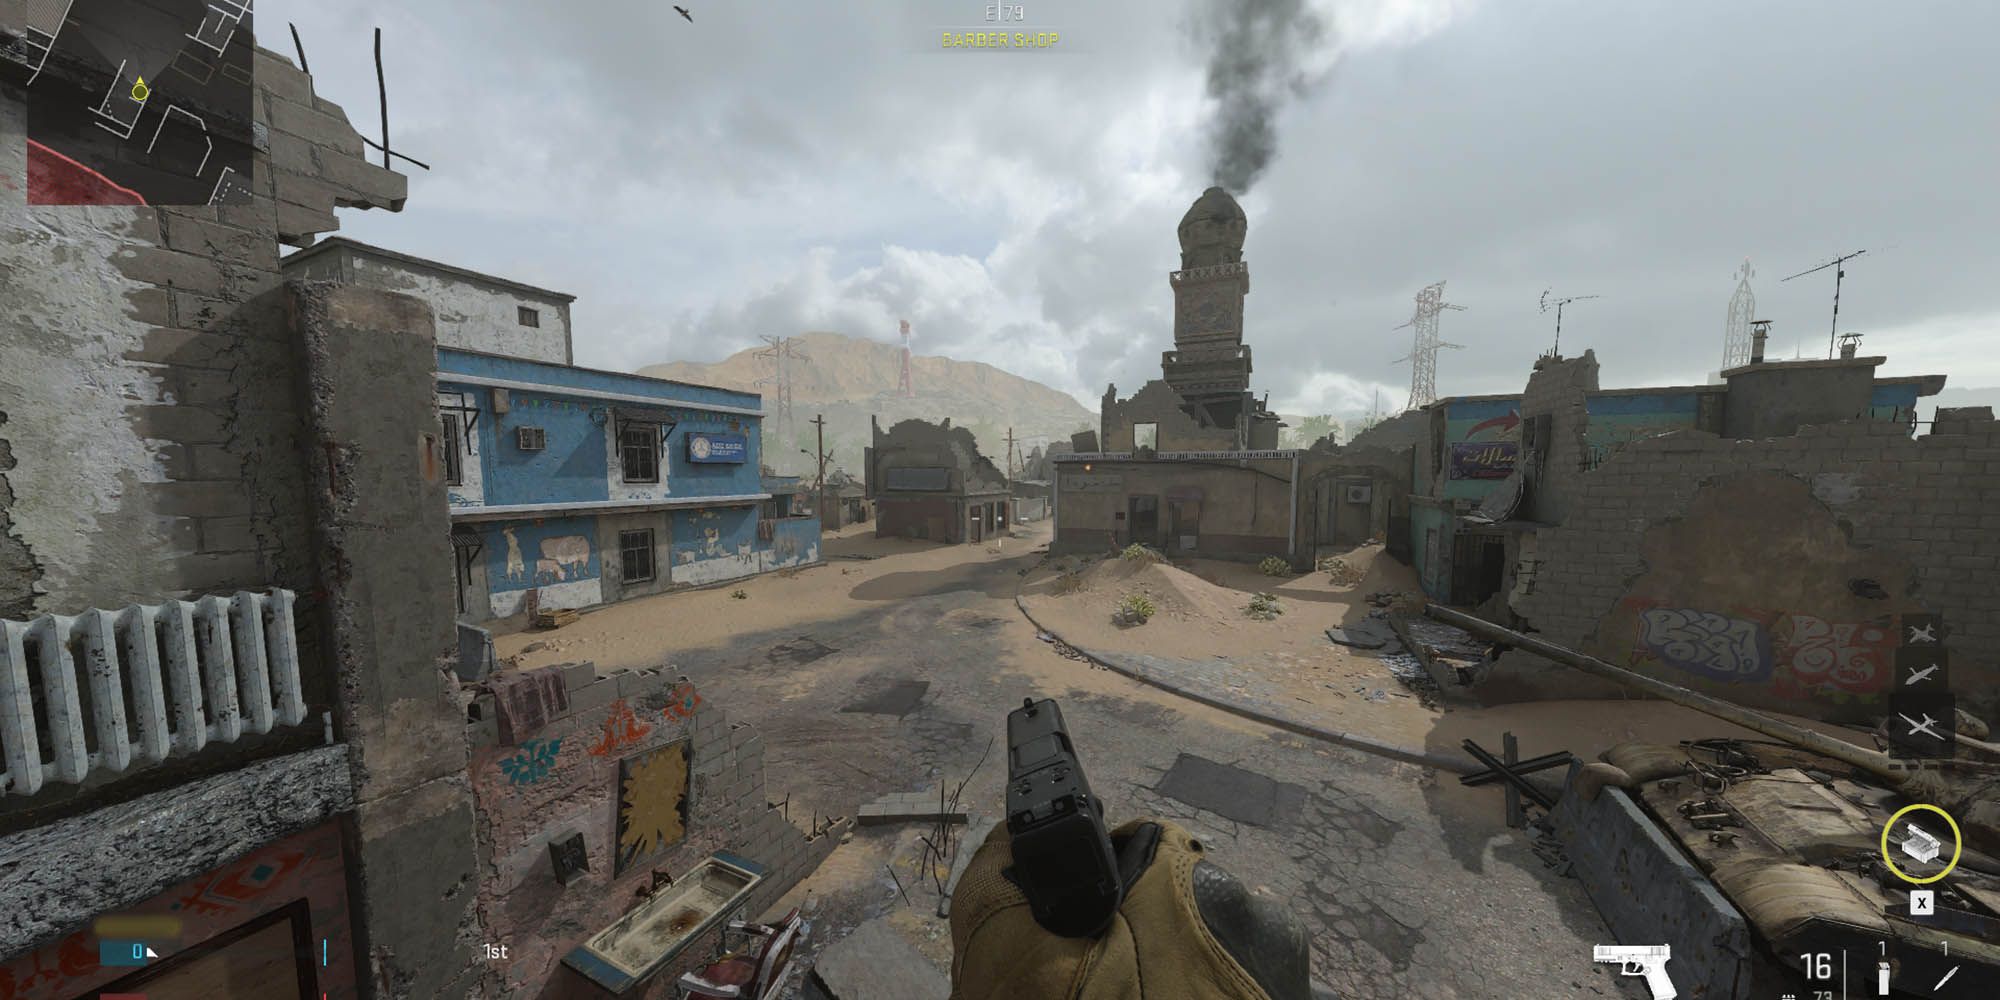 Modern Warfare 2 ruined buildings in an abandoned desert town